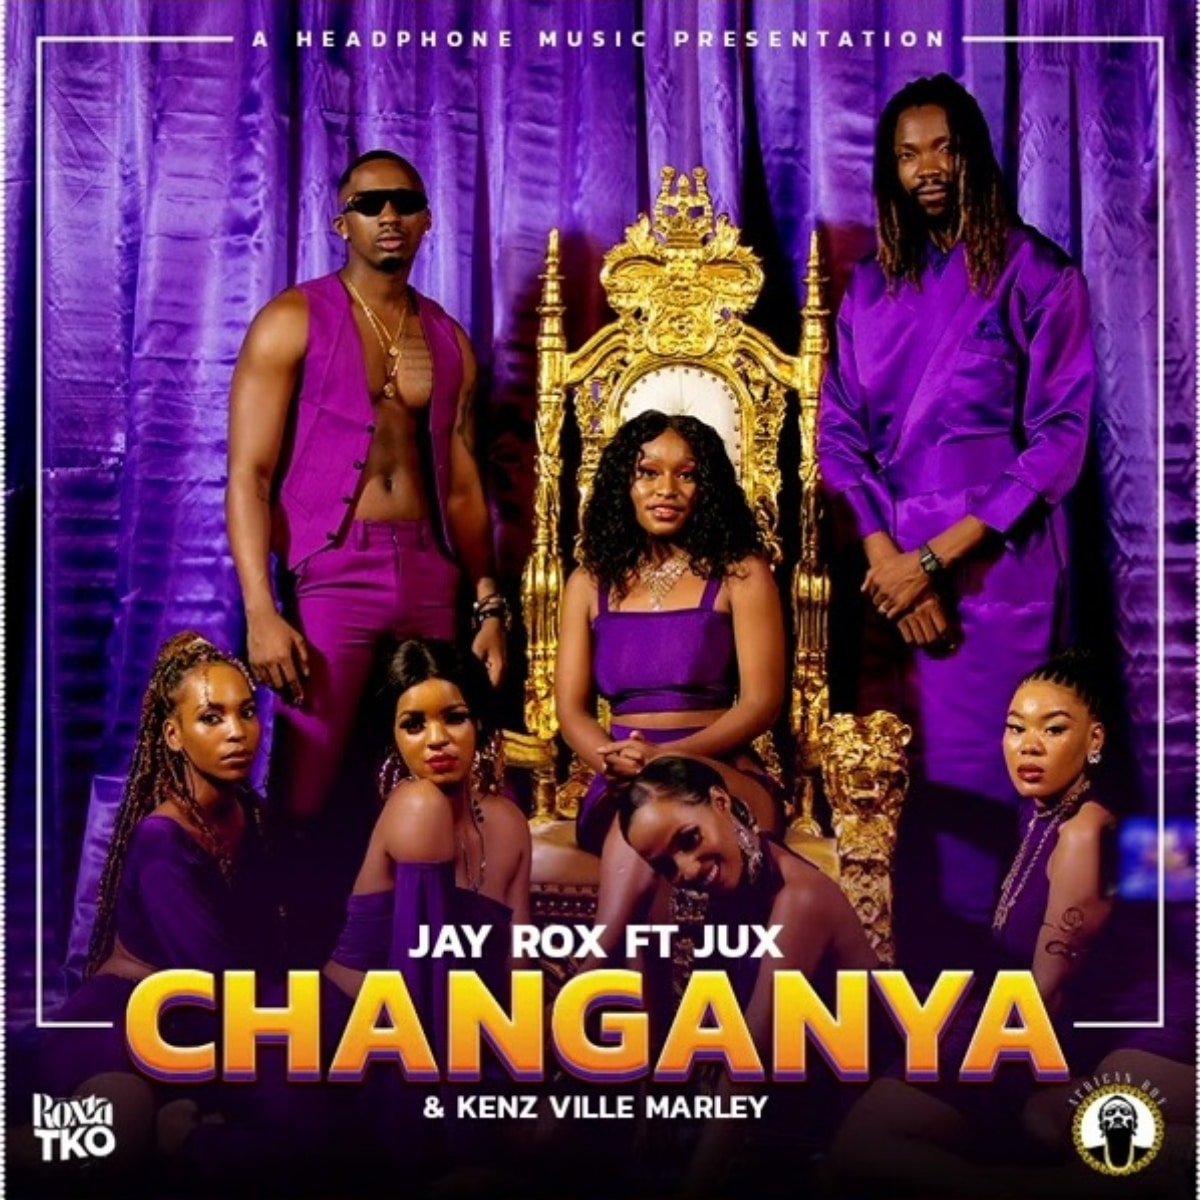 DOWNLOAD: Jay Rox Ft. Jux & Kenz Ville Marley – “Changanya” Mp3